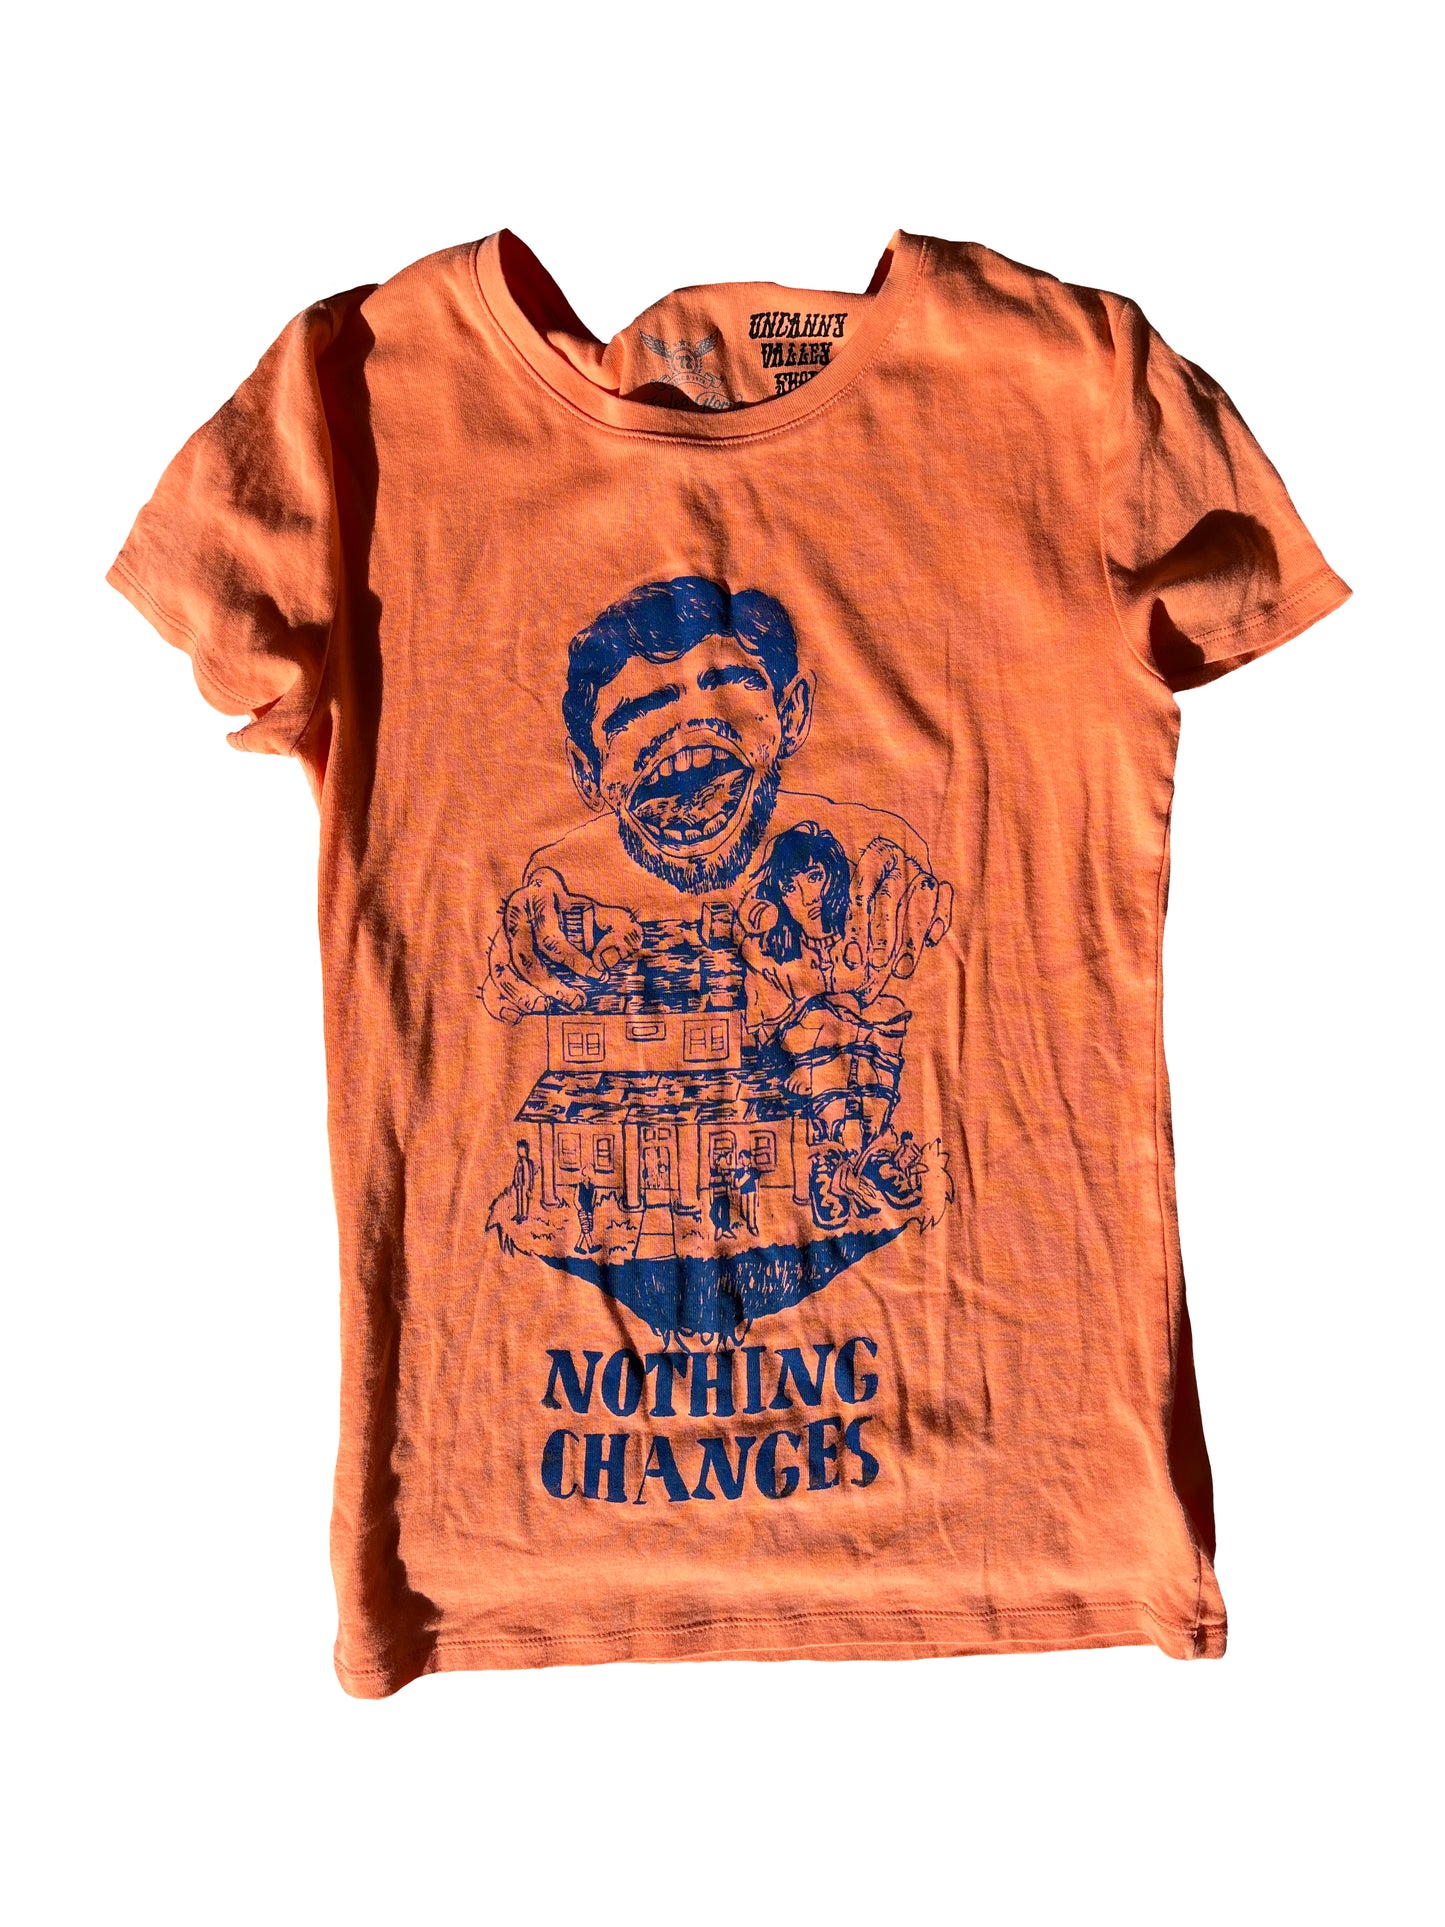 MEDIUM Nothing Changes short sleeve orange graphic tee shirt 03